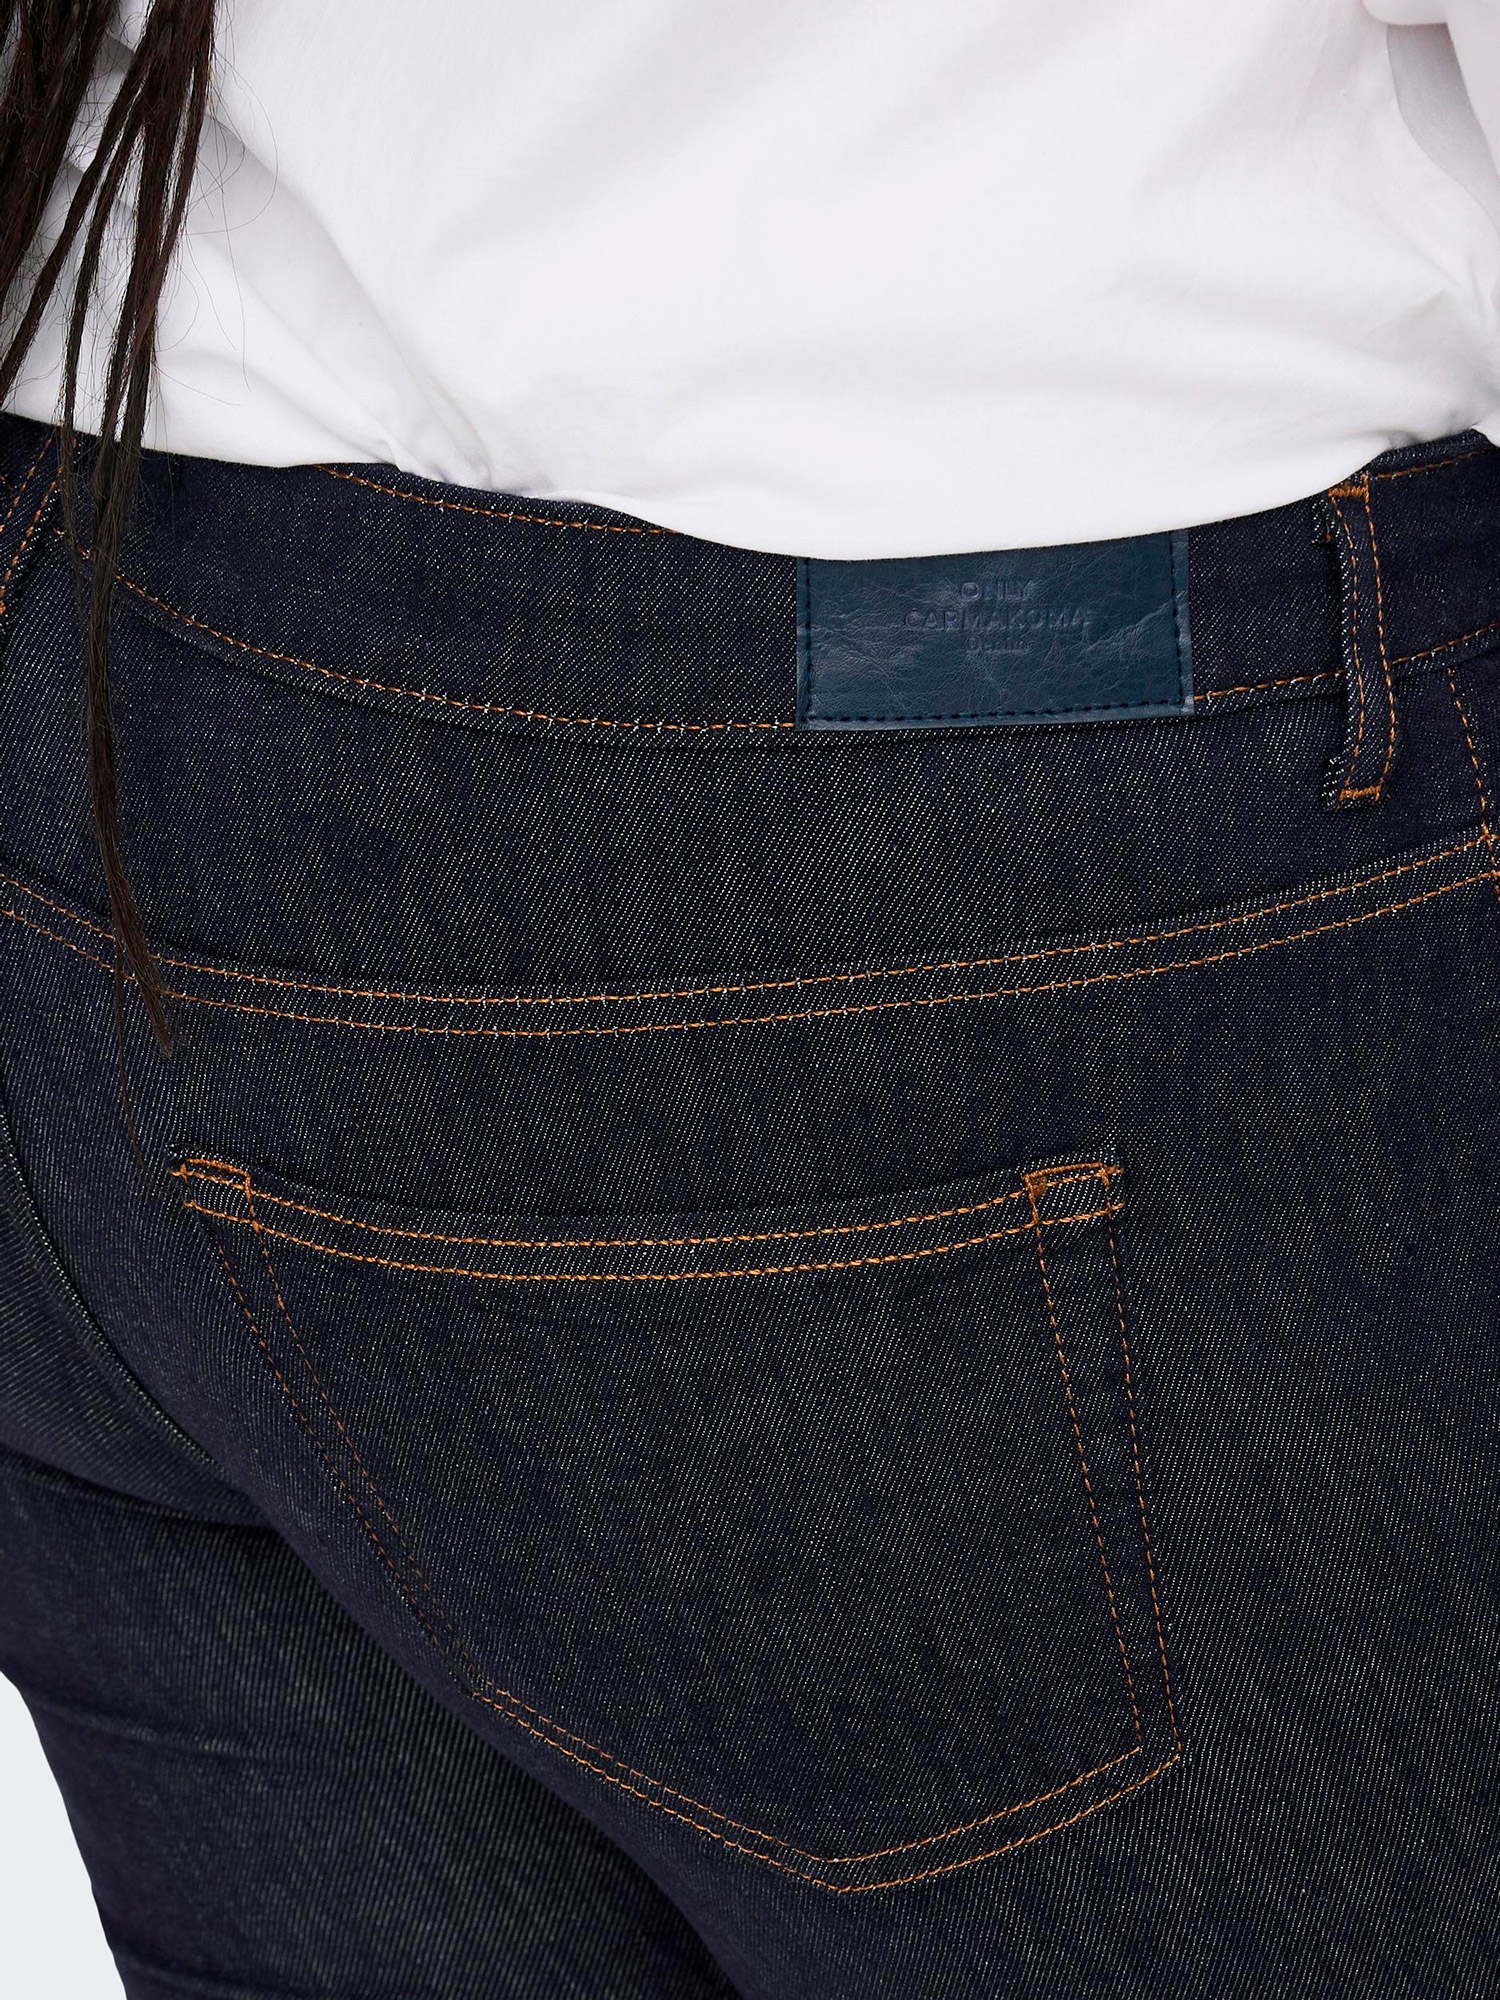 WILLY - Mörkblå jeans med stretch fra Only Carmakoma